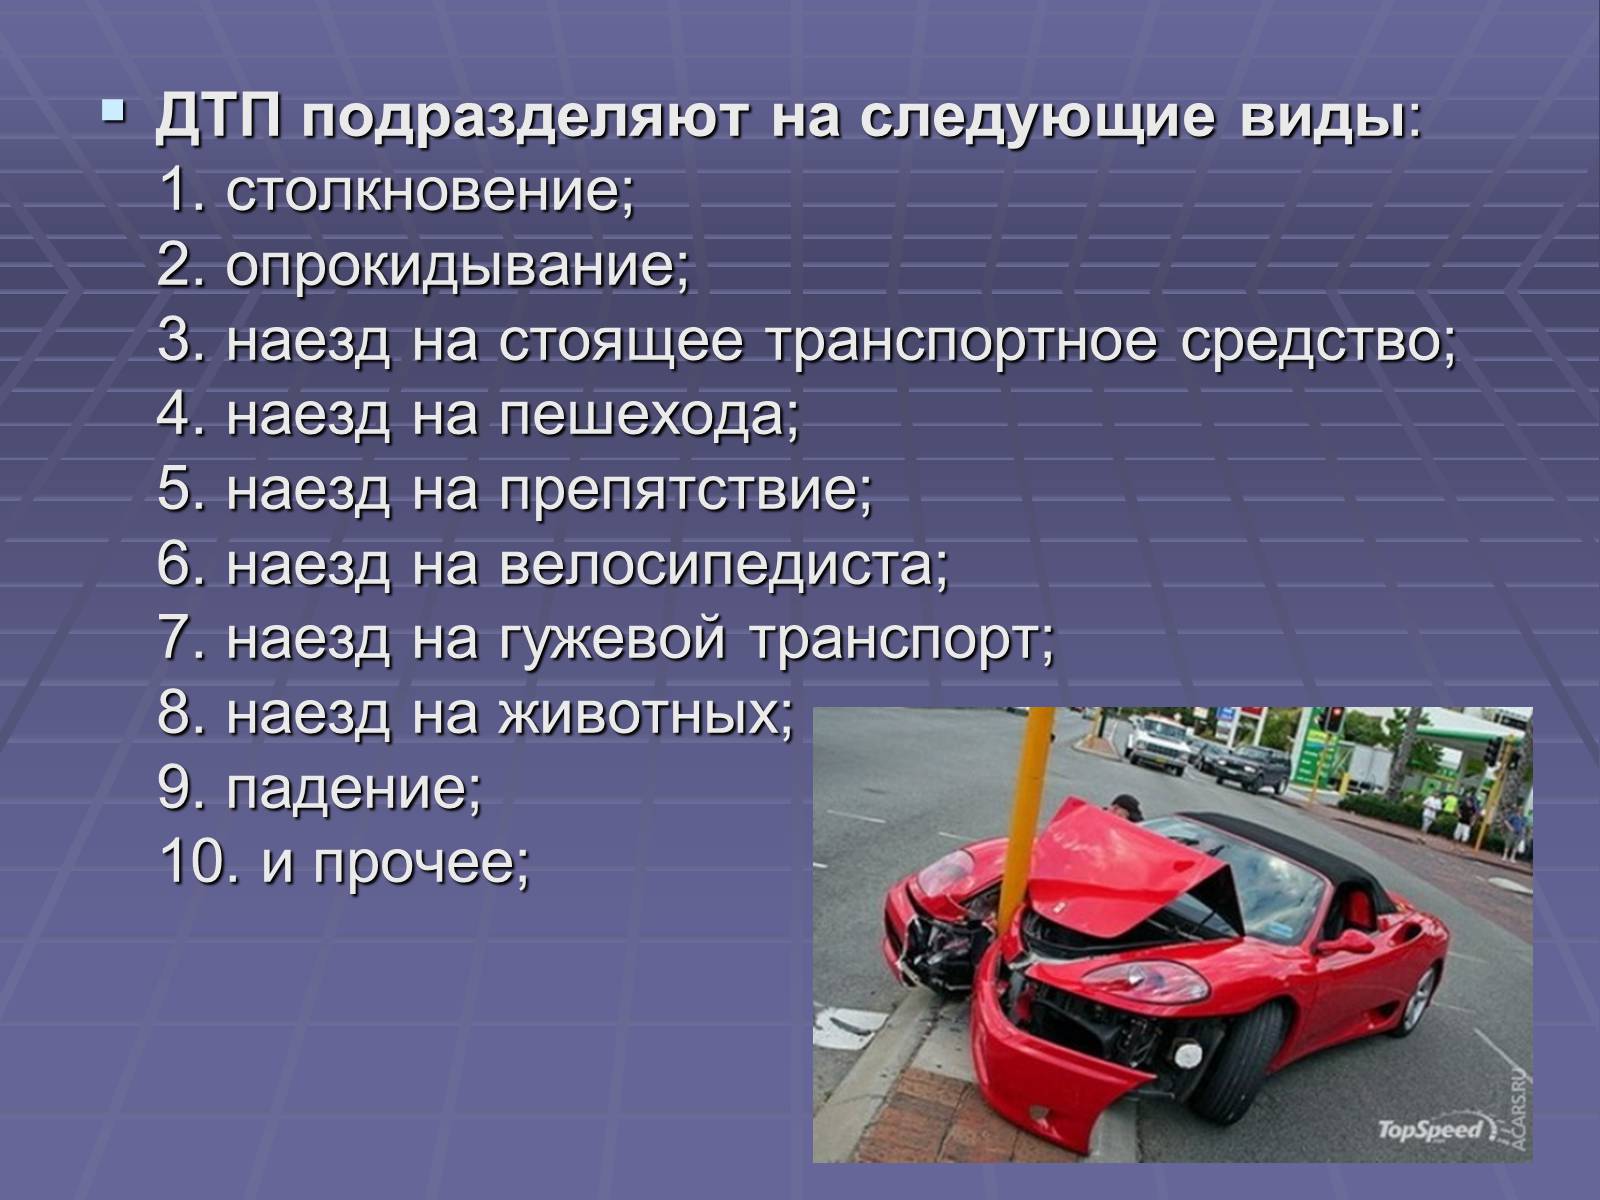 Презентація на тему «Дорожно-транспортные происшествия» - Слайд #11